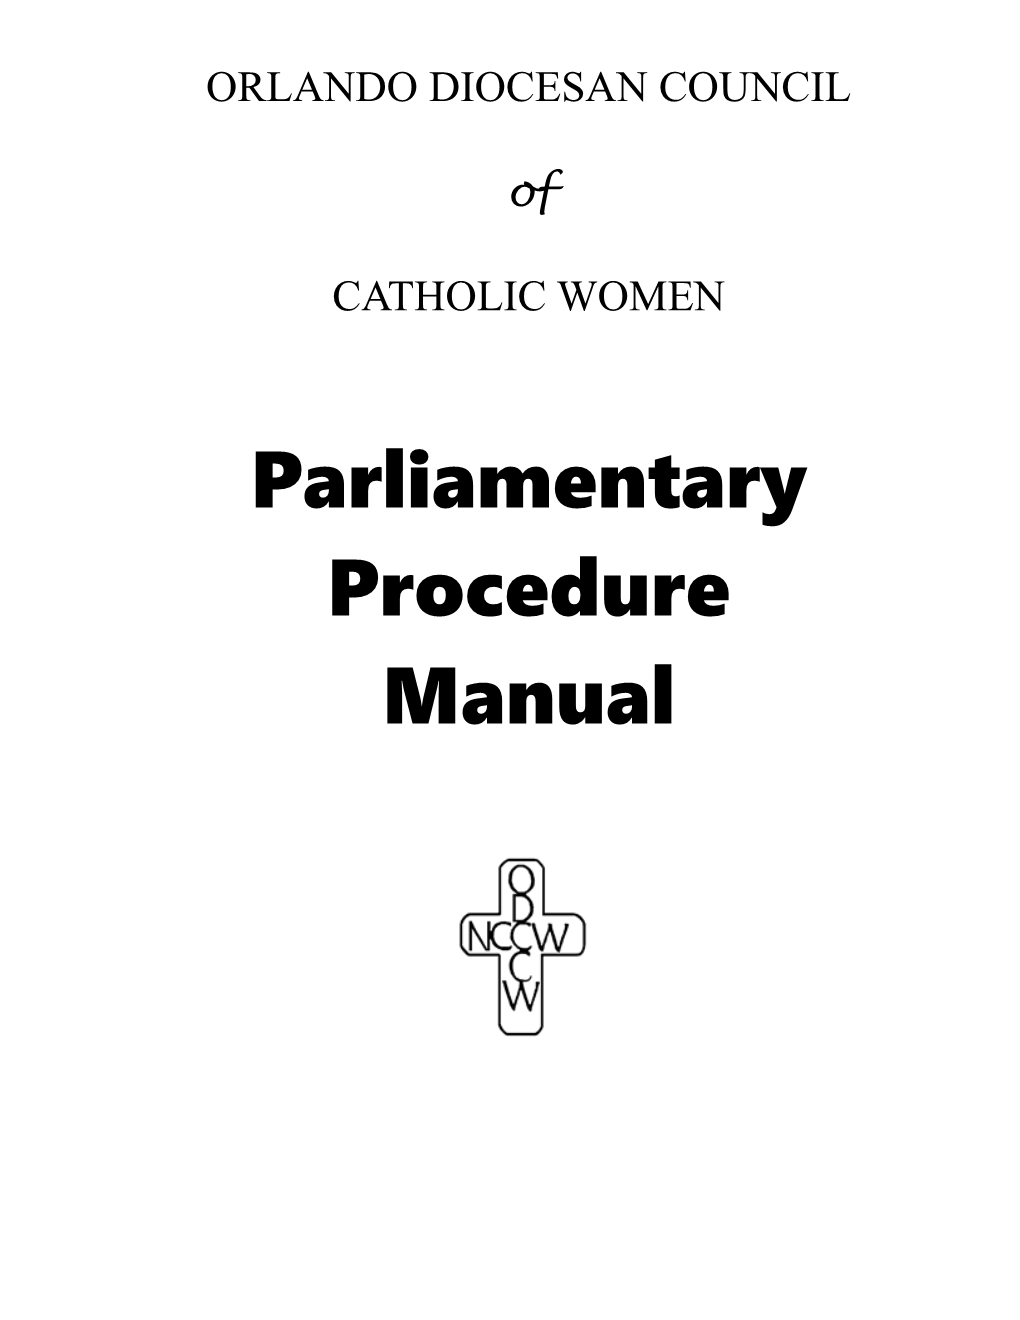 Parliamentary Procedure Manual